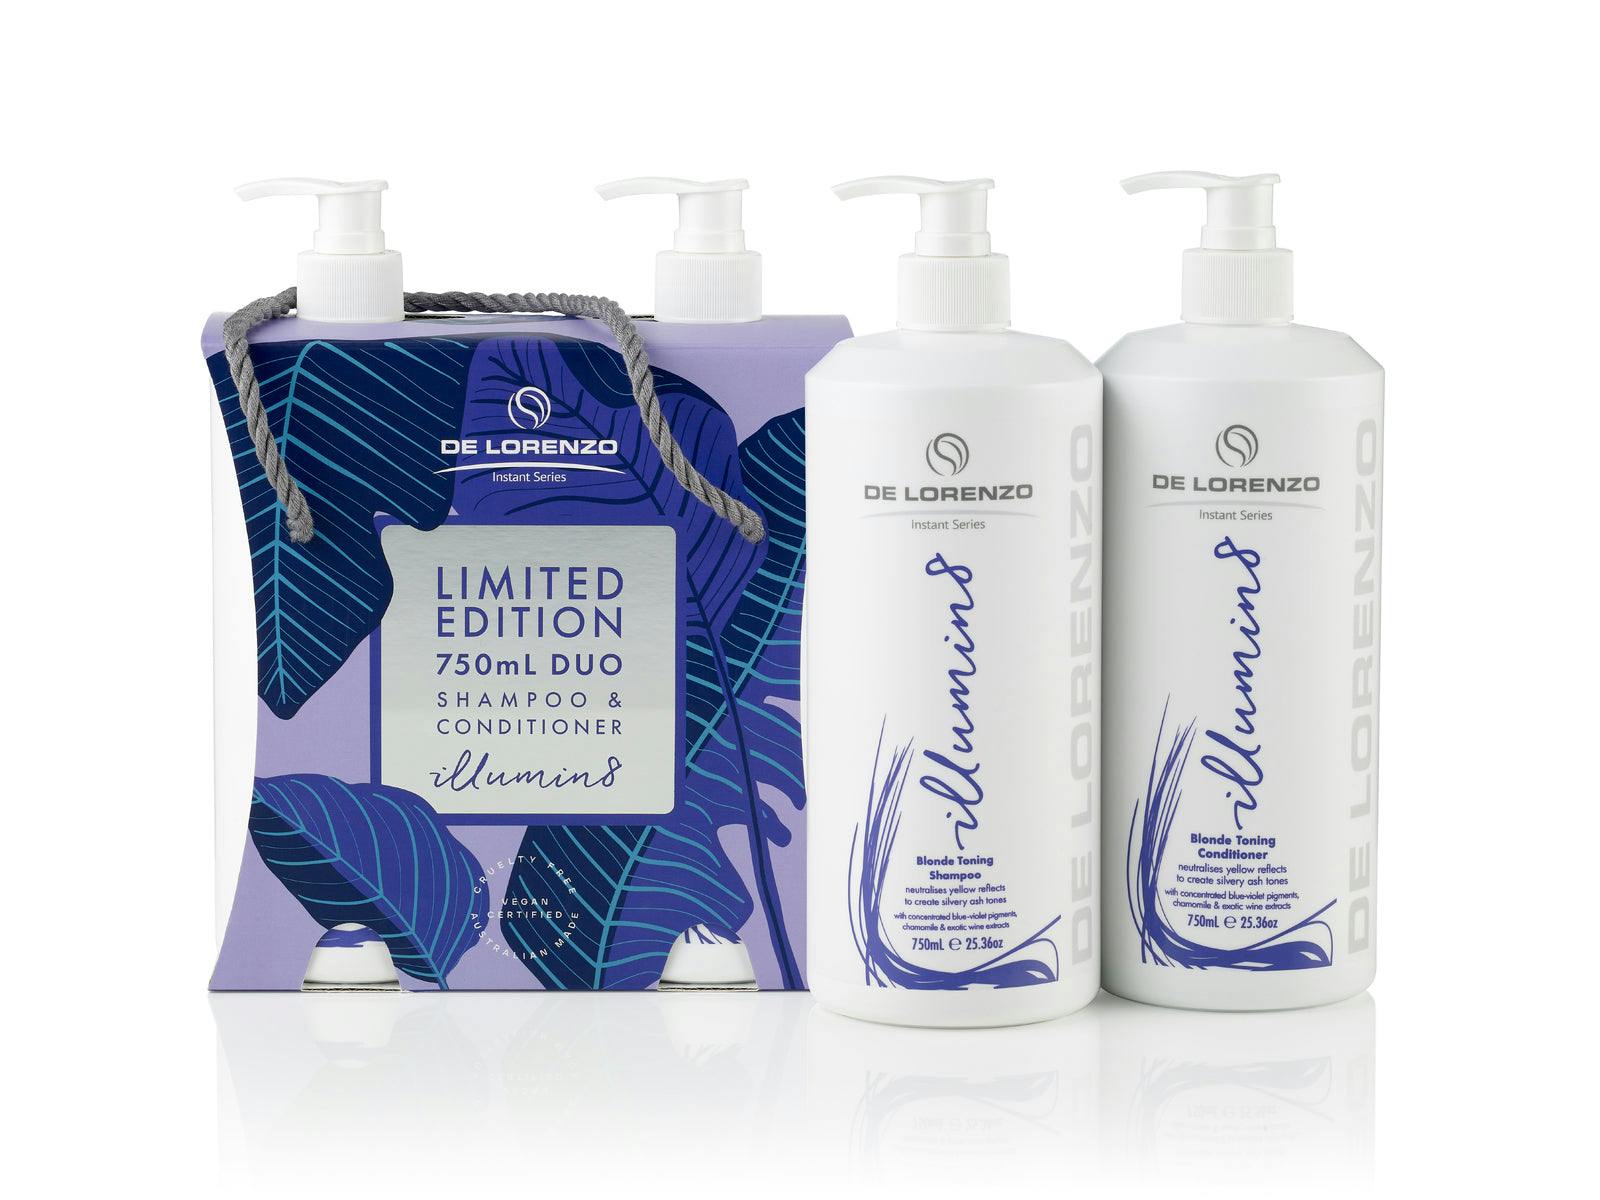 De Lorenzo Instant Illumin8 Shampoo and Conditioner 750ml Duo Pack